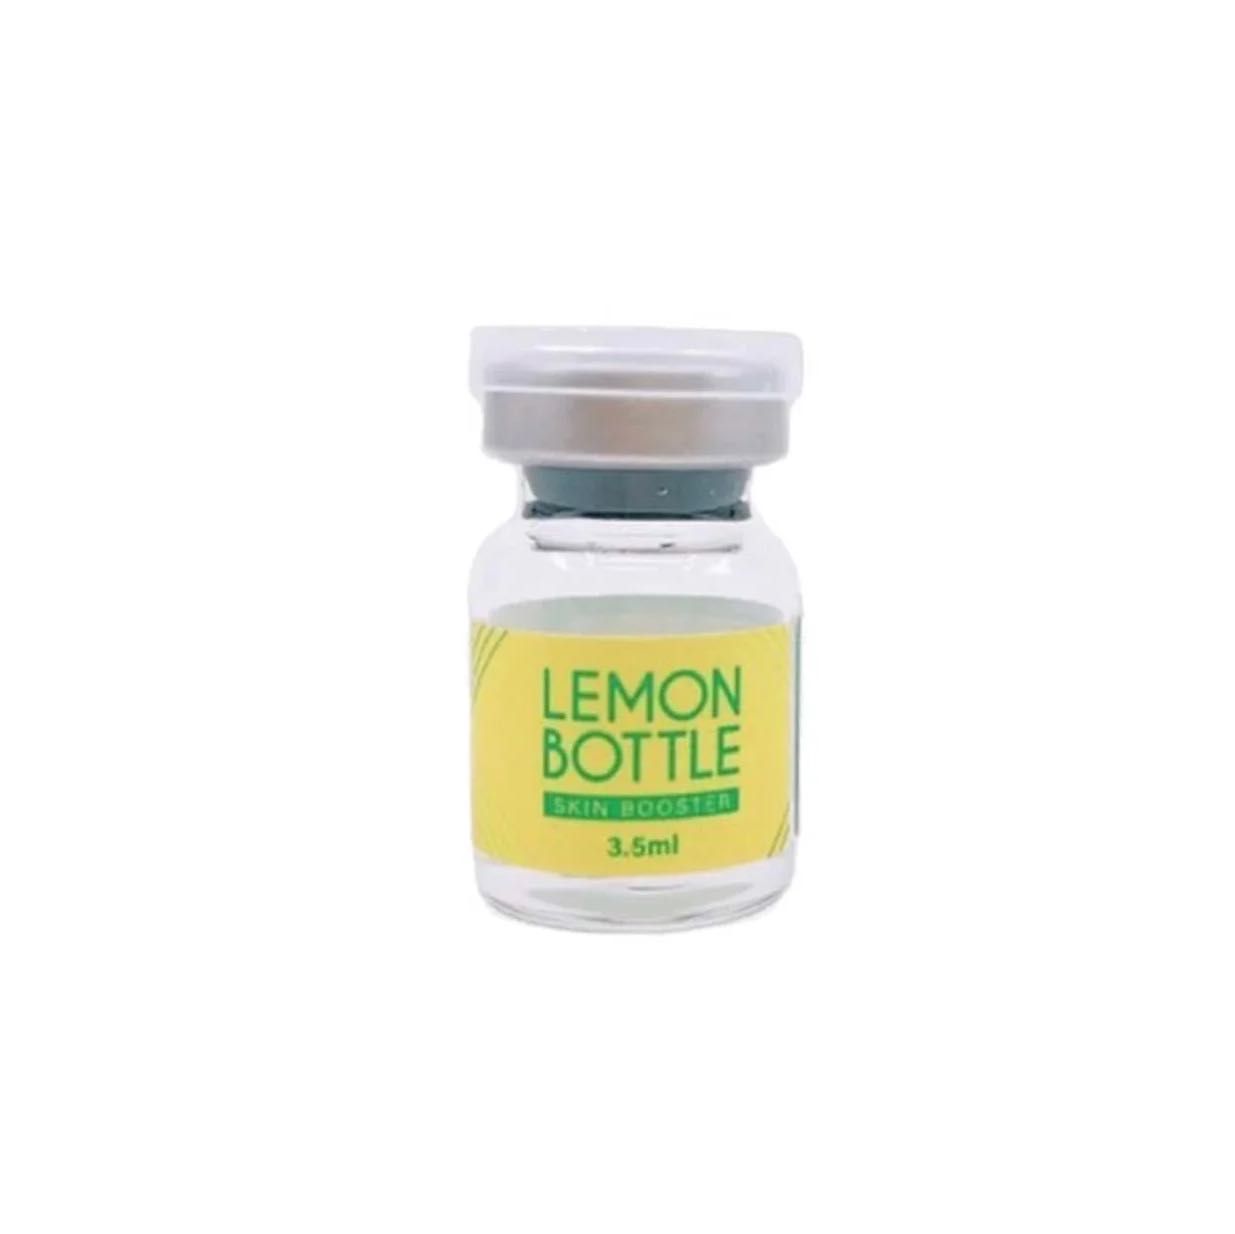 Lemon bottle skin boosters portfolio